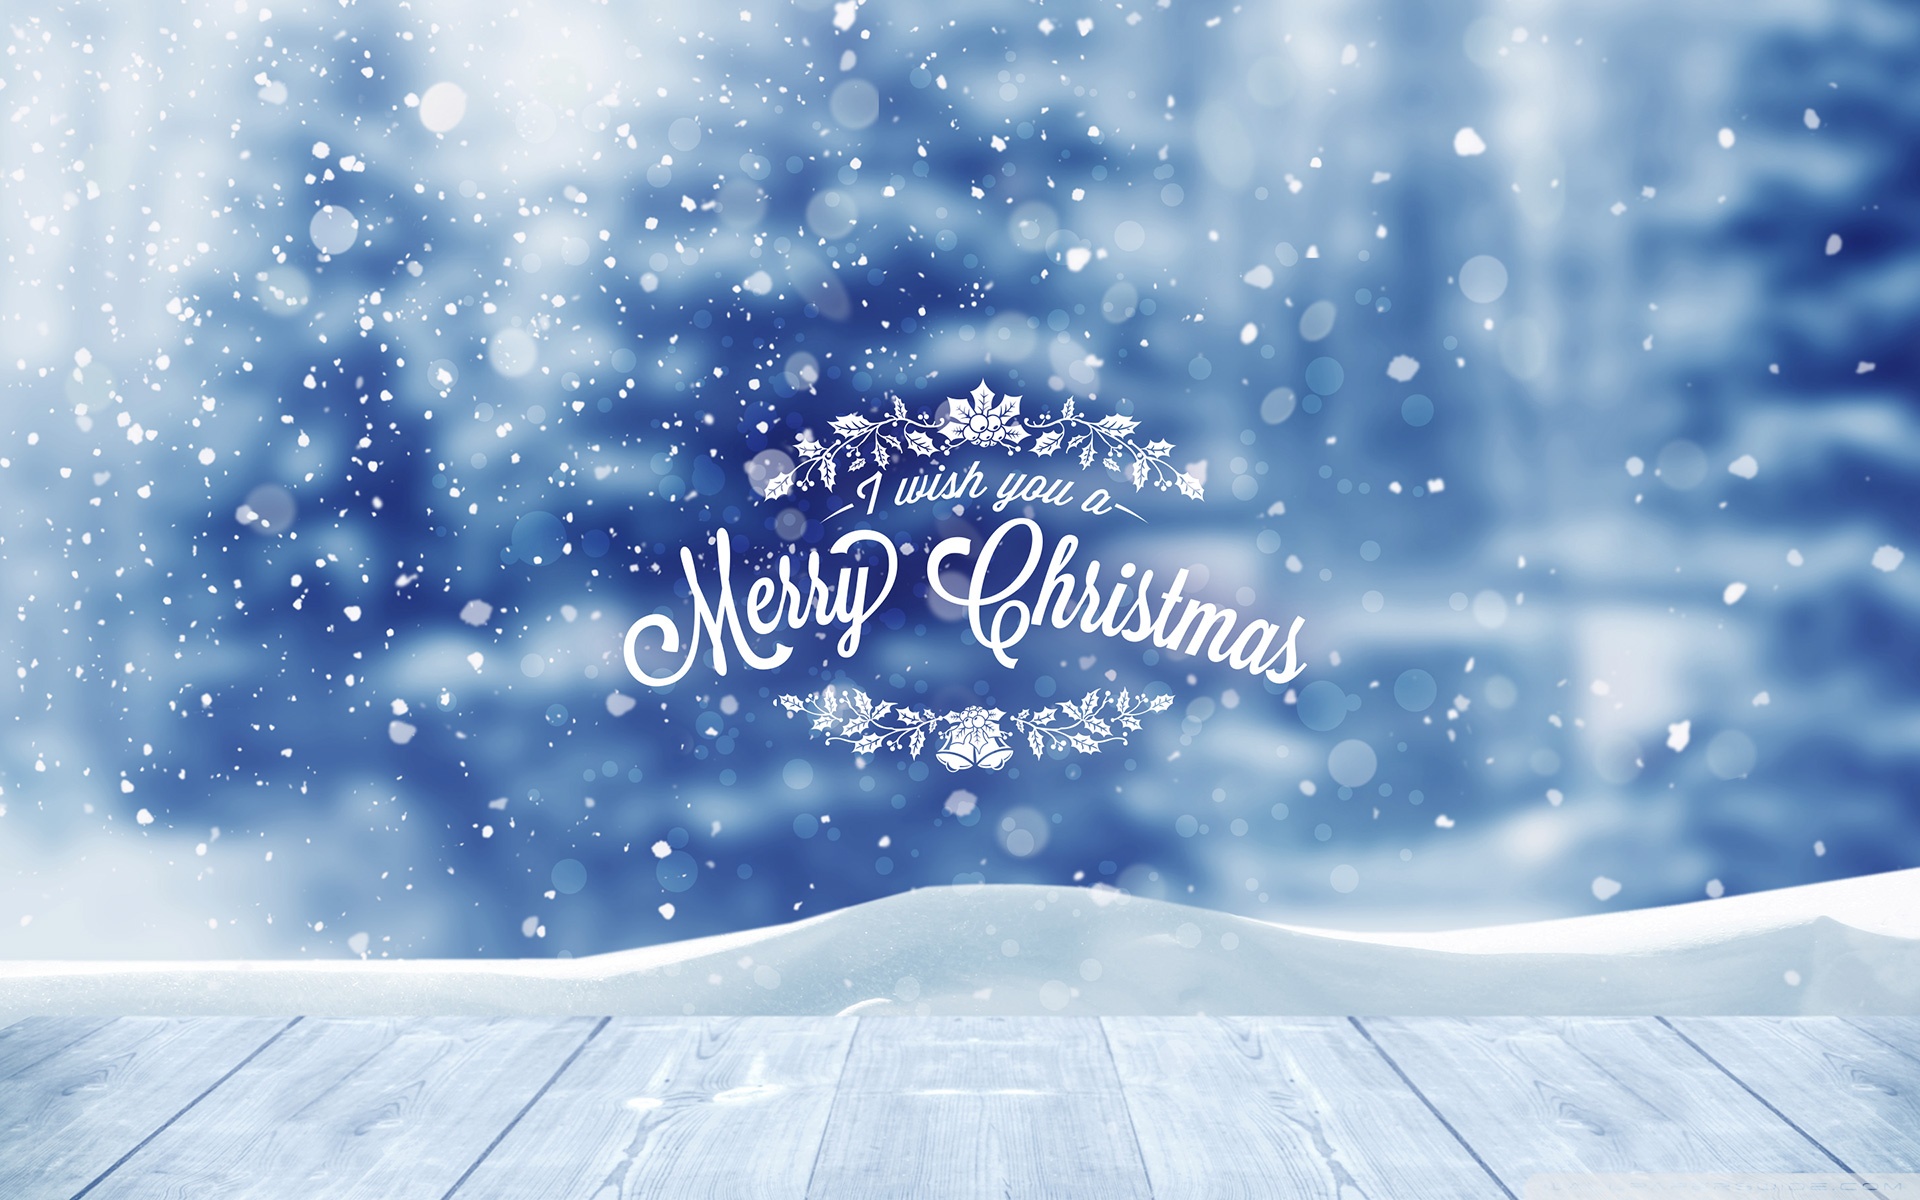 Merry Christmas Wallpaper HD Image For iPhone Desktop